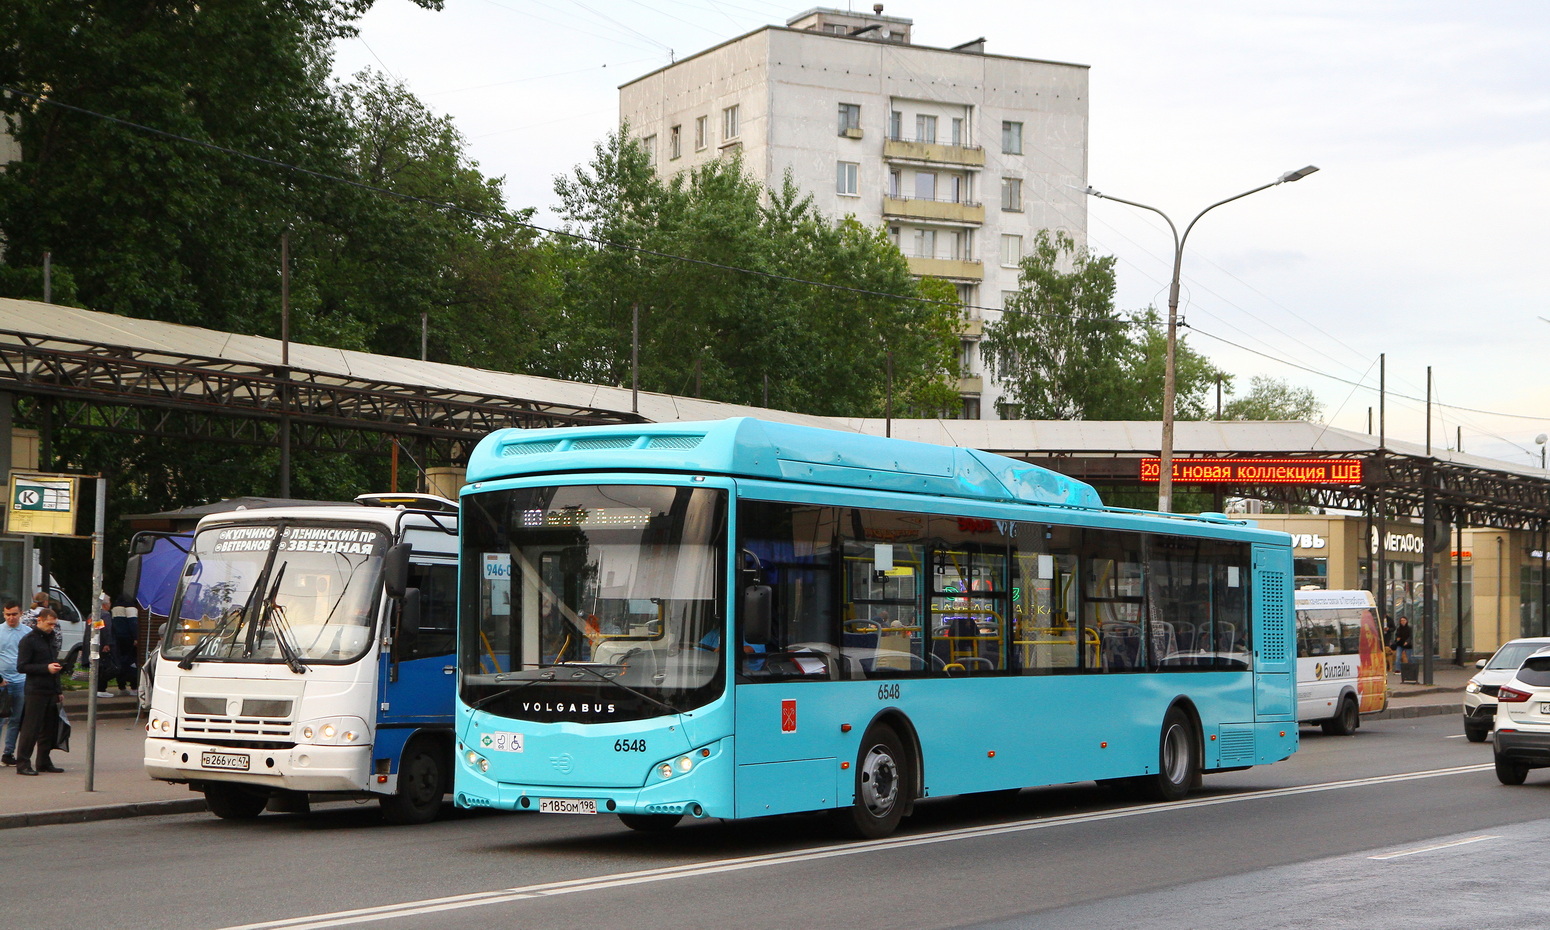 Saint Petersburg, Volgabus-5270.G4 (CNG) # 6548